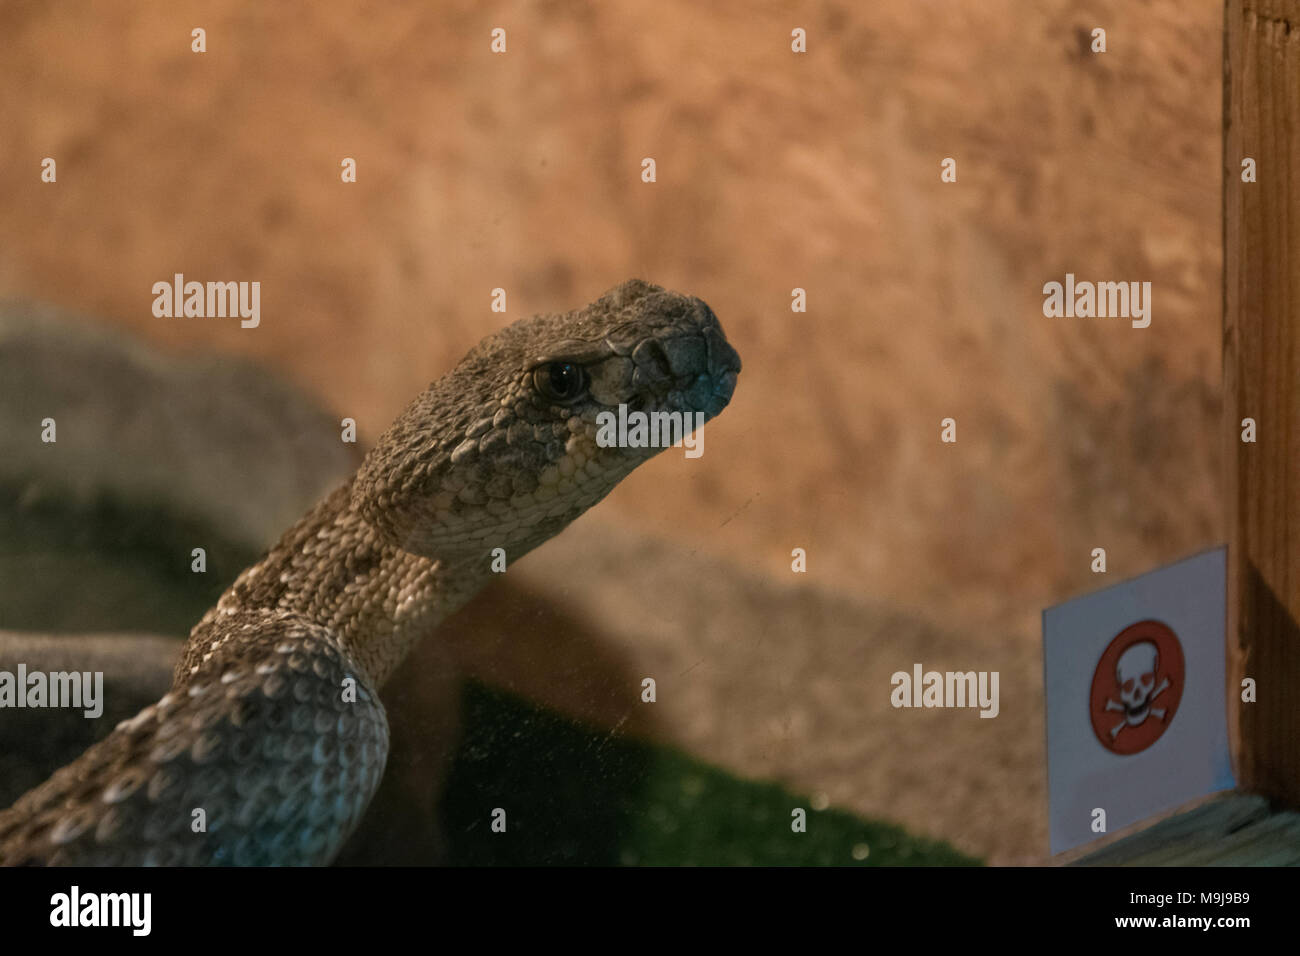 Dangerous poisonous snake in the terrarium - western diamond rattlesnake Stock Photo